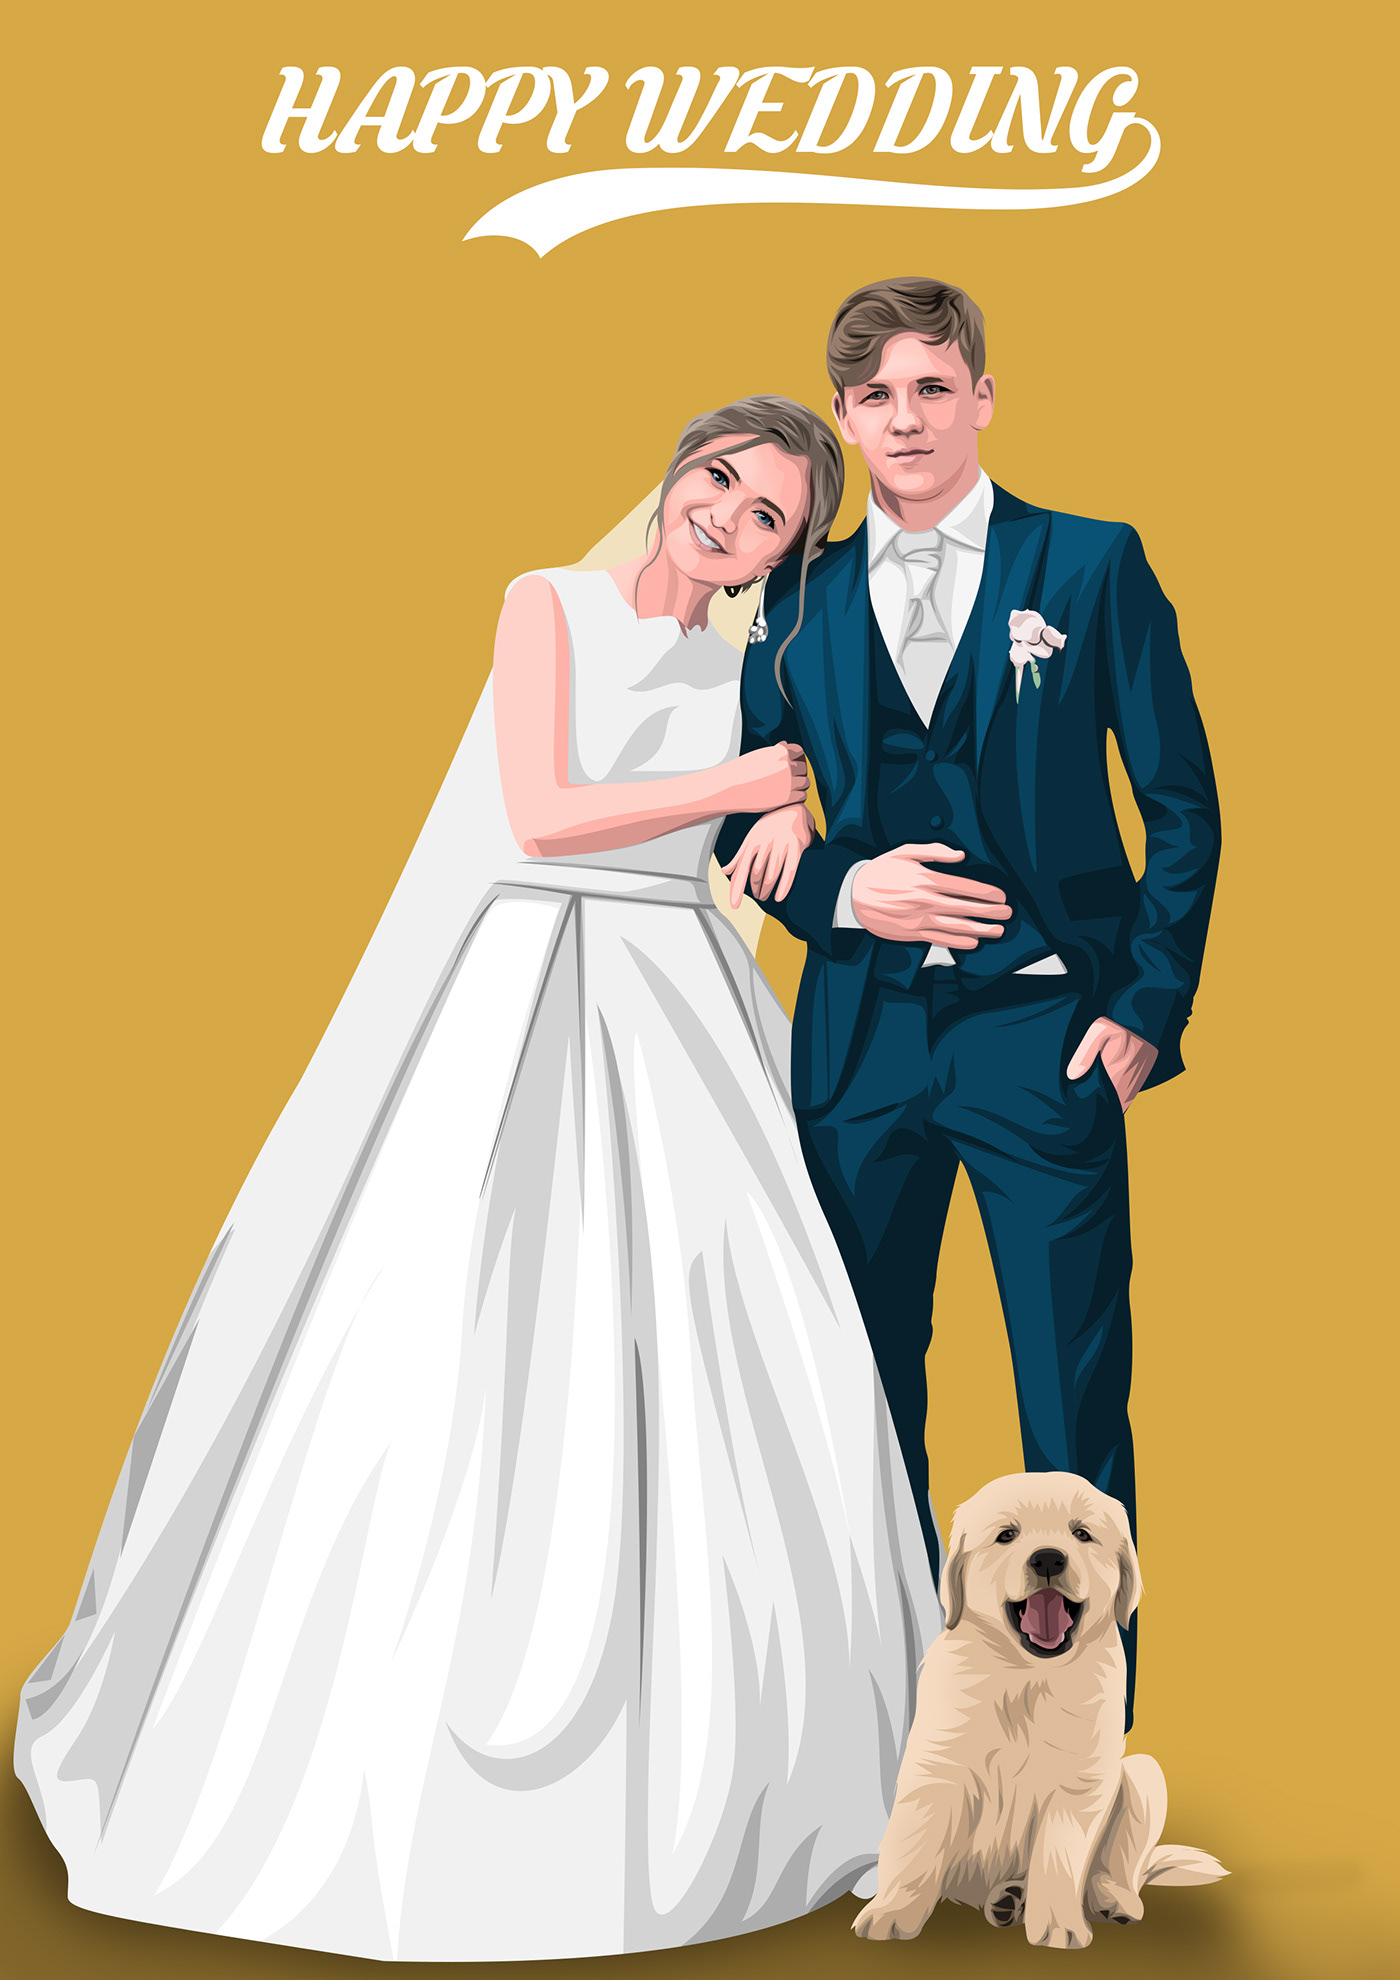 Image may contain: wedding dress, cartoon and bride